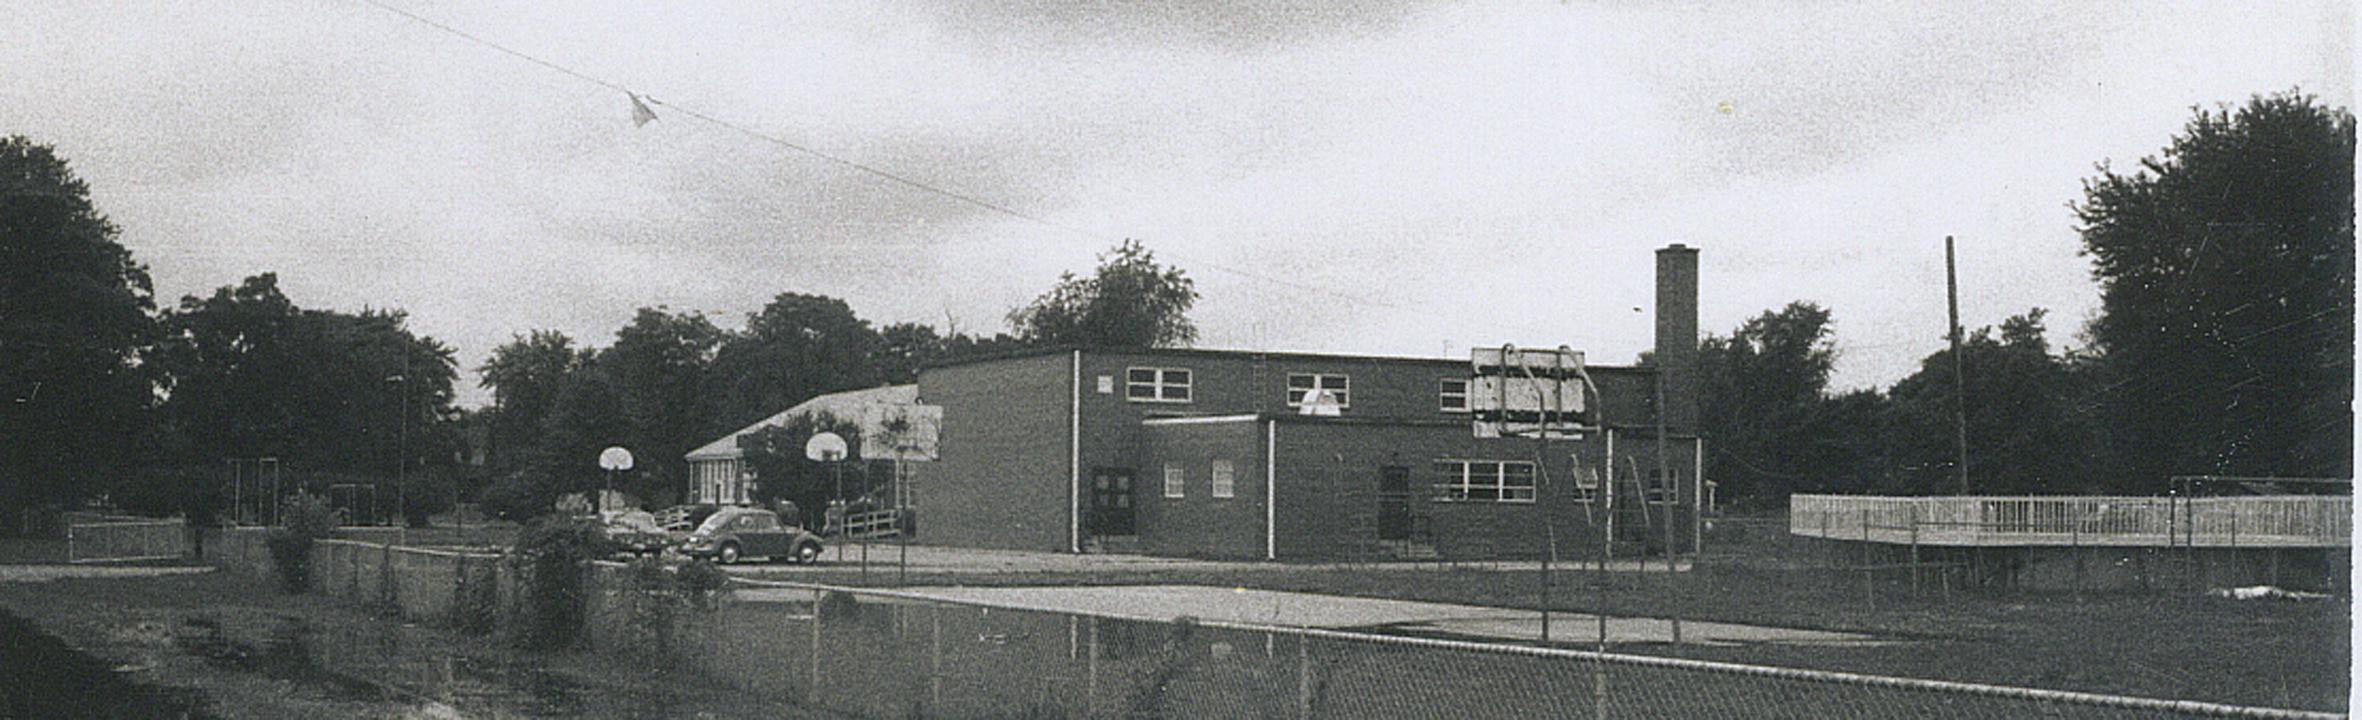 Lakeland Elementary School with Pool